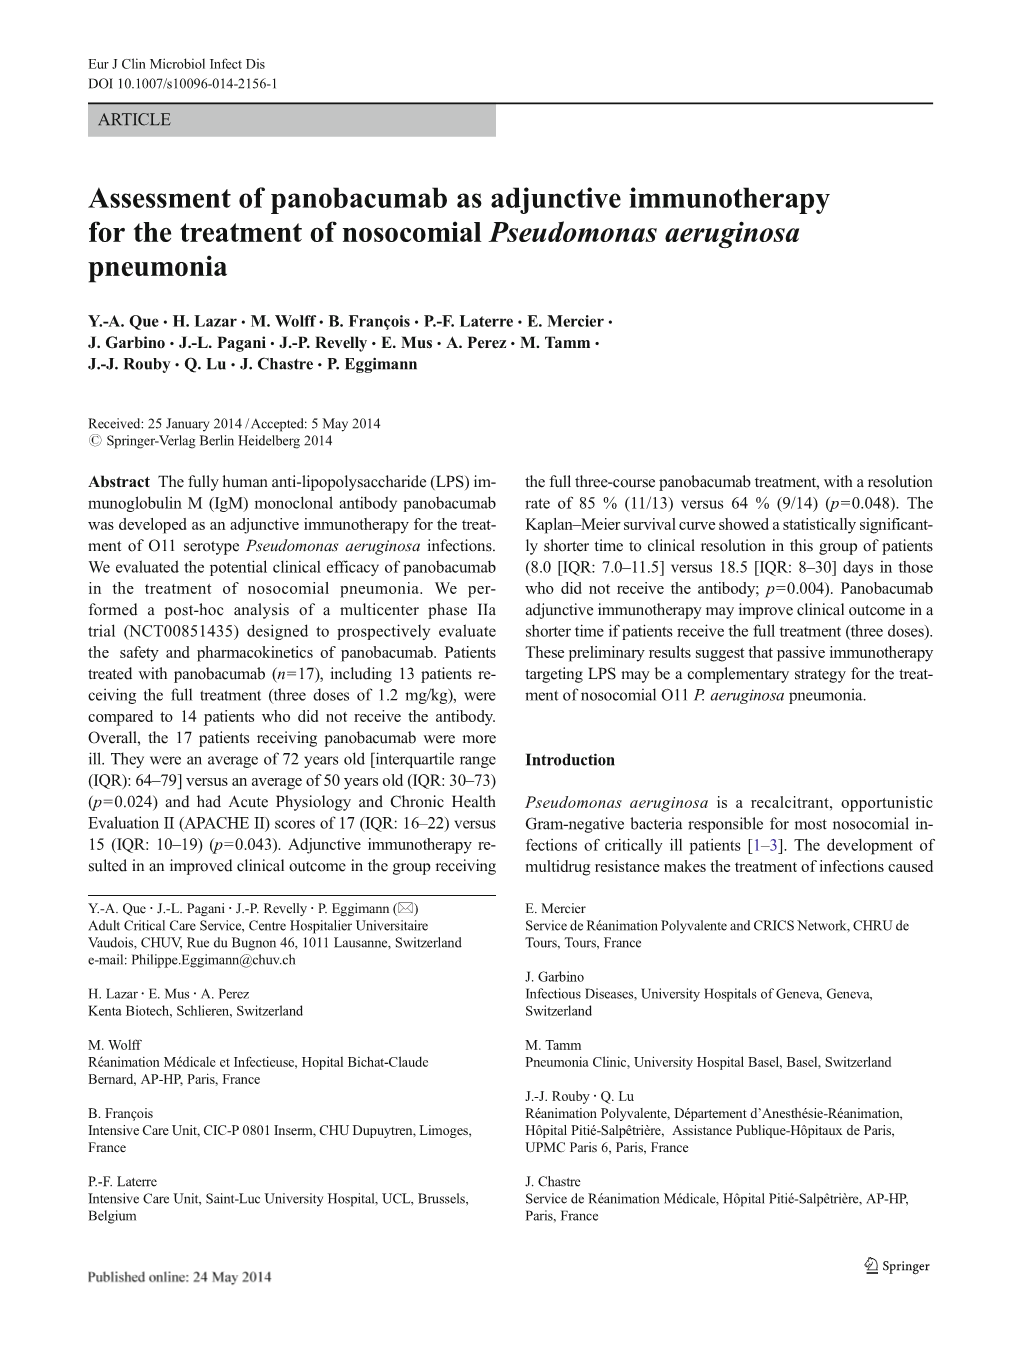 Assessment of Panobacumab As Adjunctive Immunotherapy for the Treatment of Nosocomial Pseudomonas Aeruginosa Pneumonia